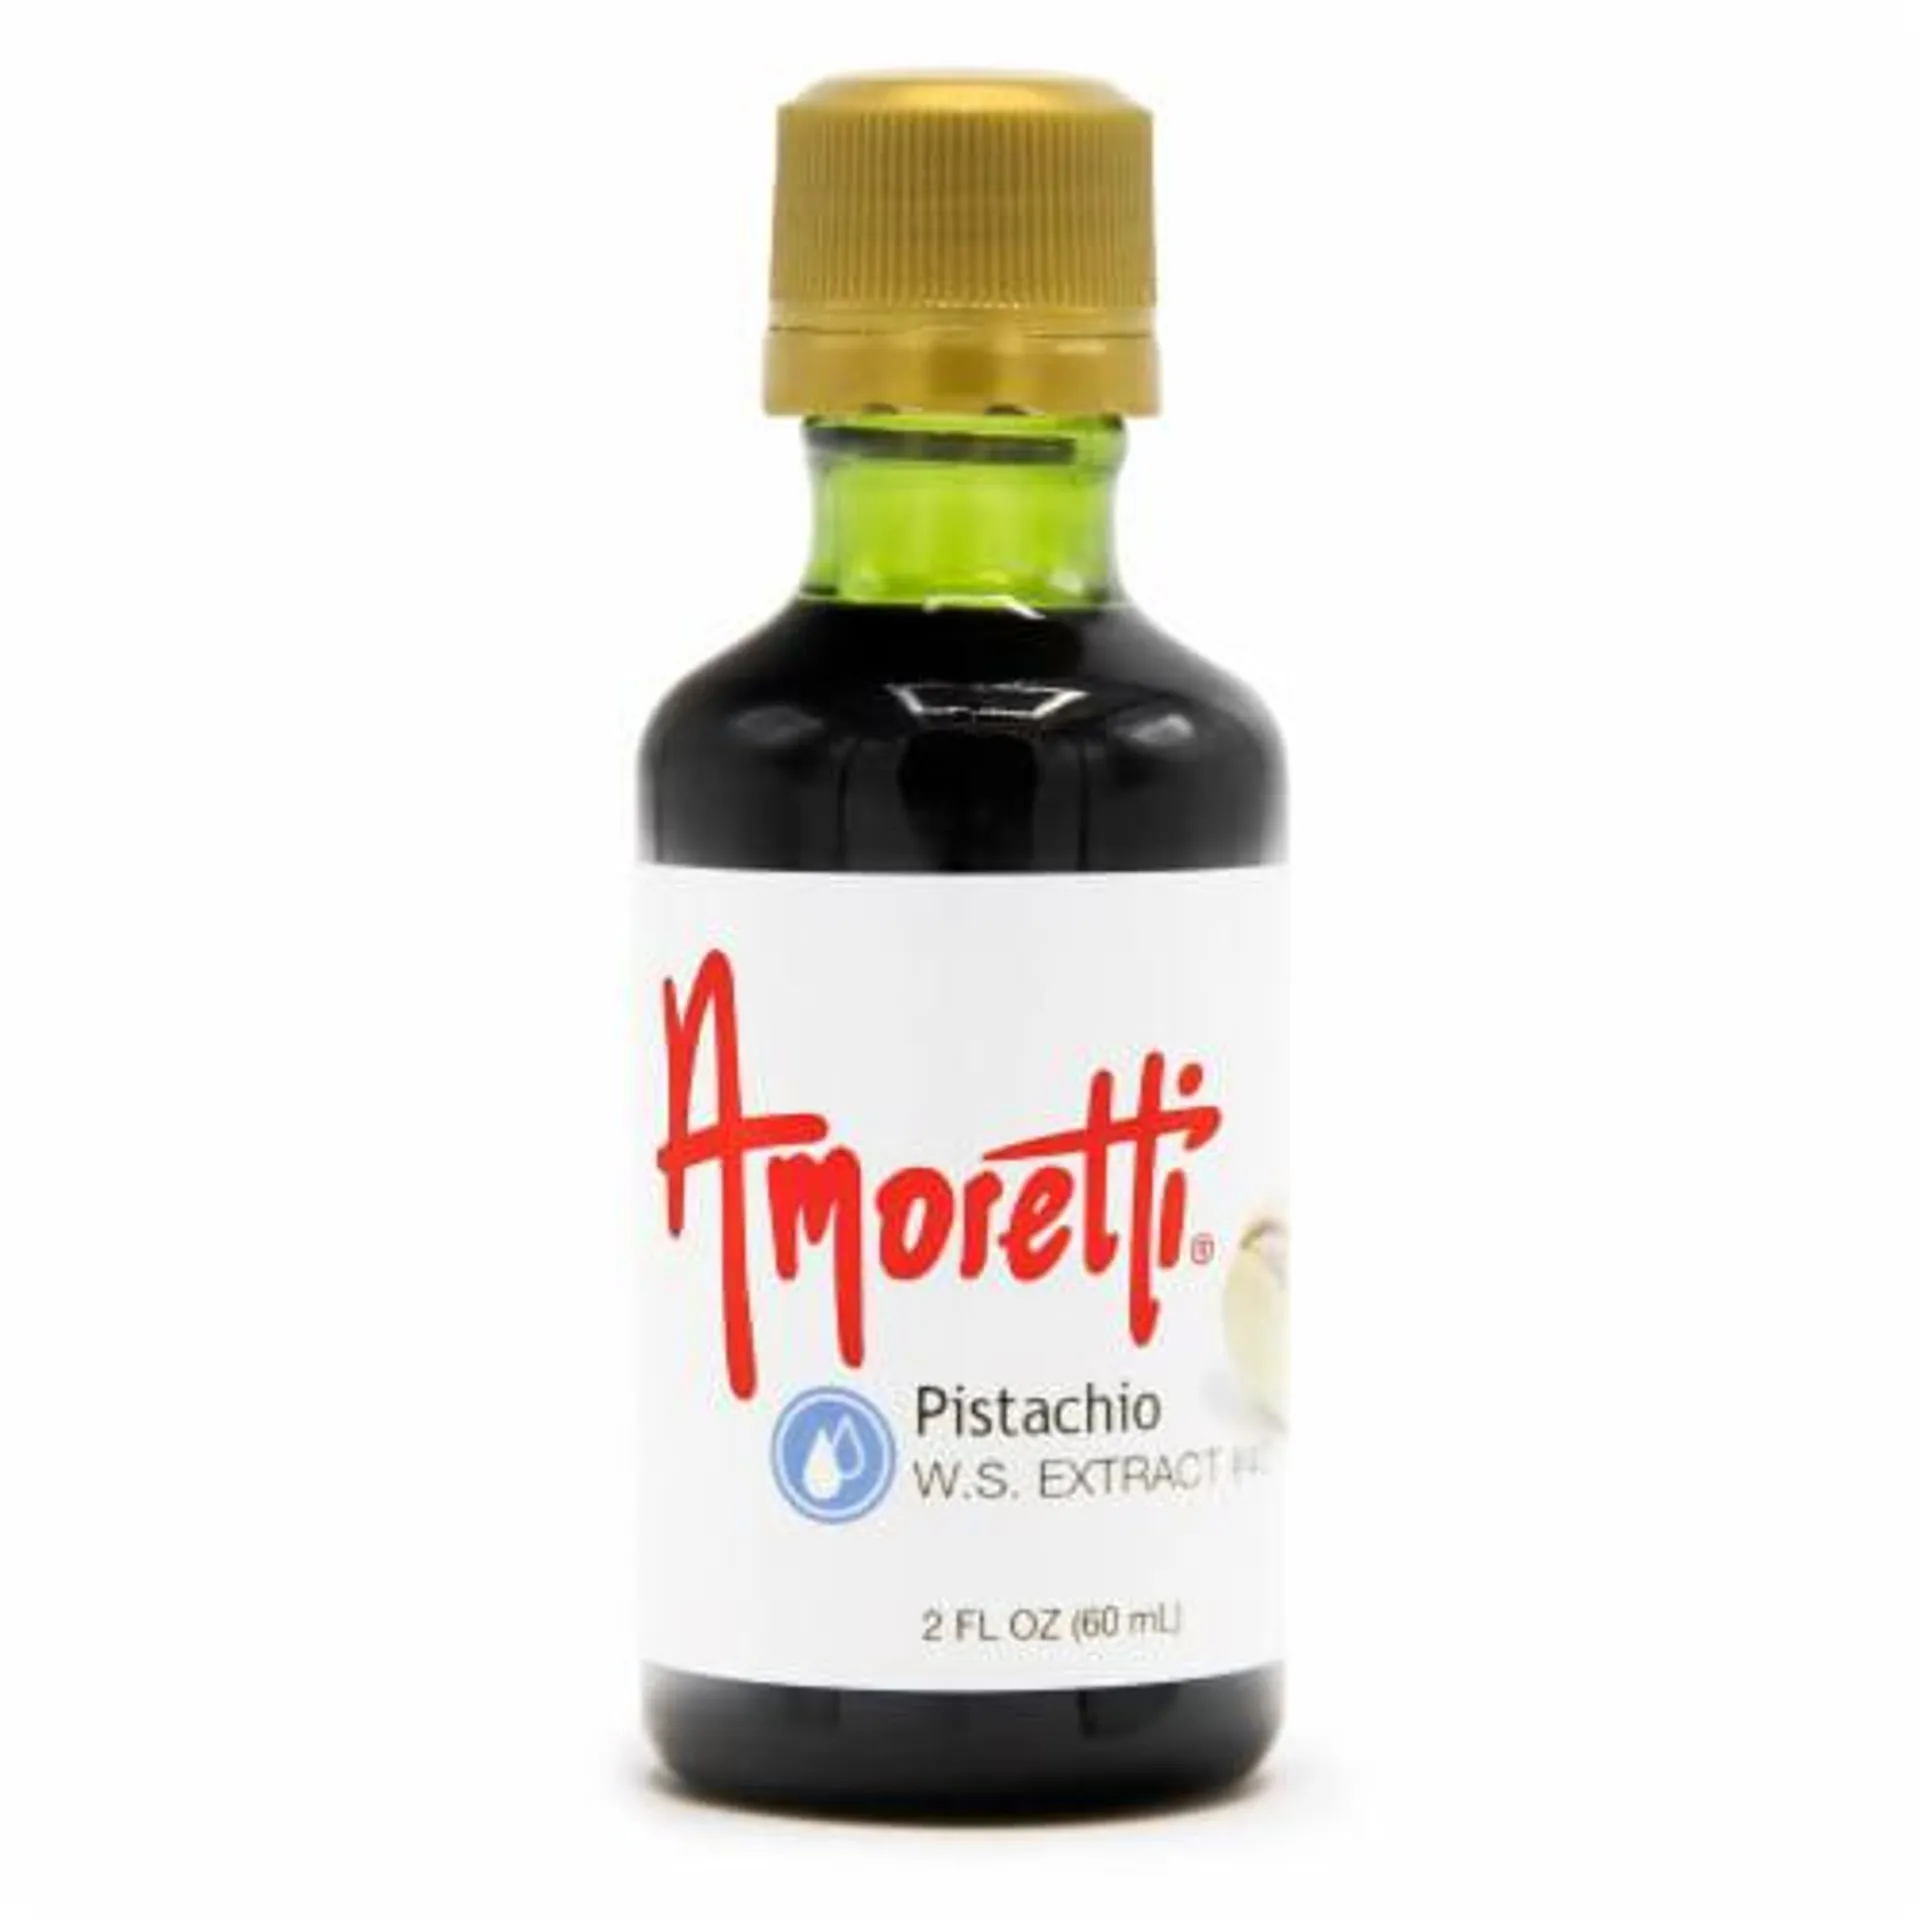 Amoretti Pistachio Extract Water Soluble - 2 oz